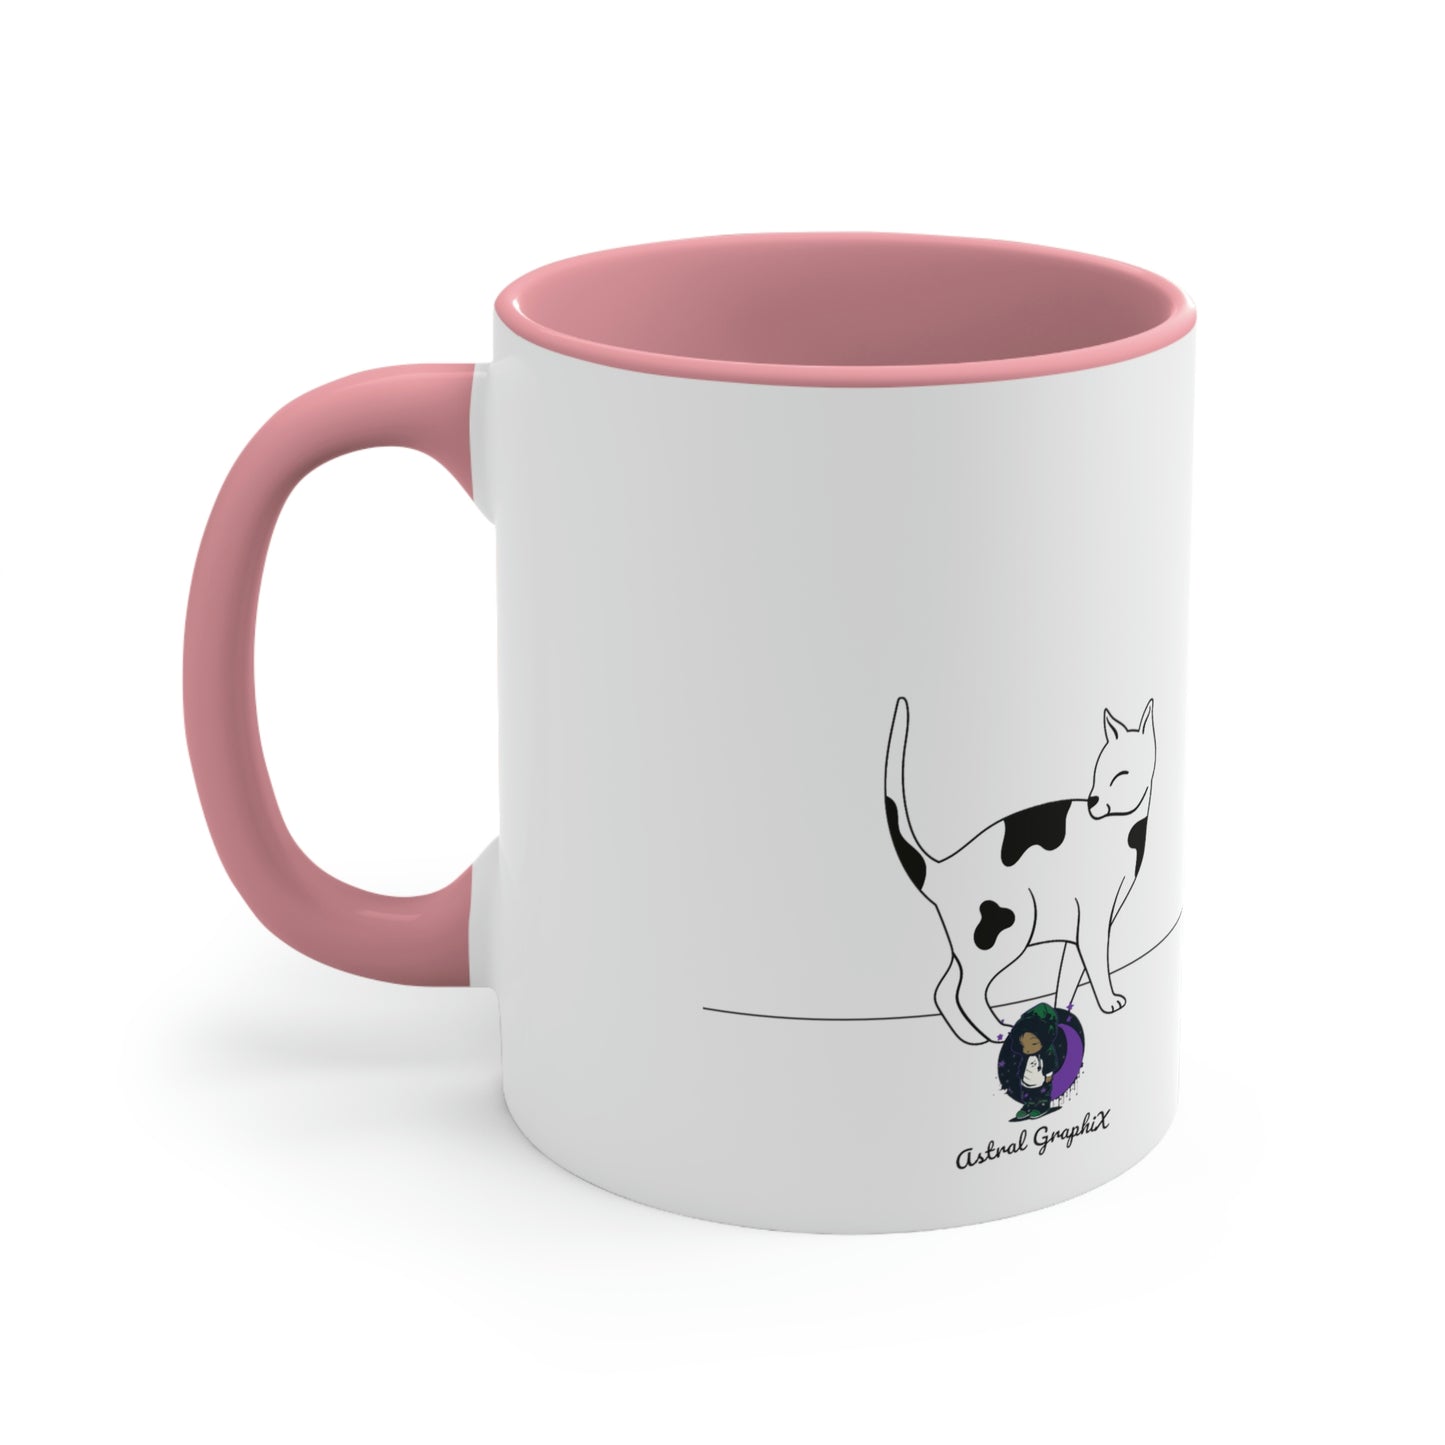 Animal Collection - Accent Coffee Mug, 11oz - Cat Parent